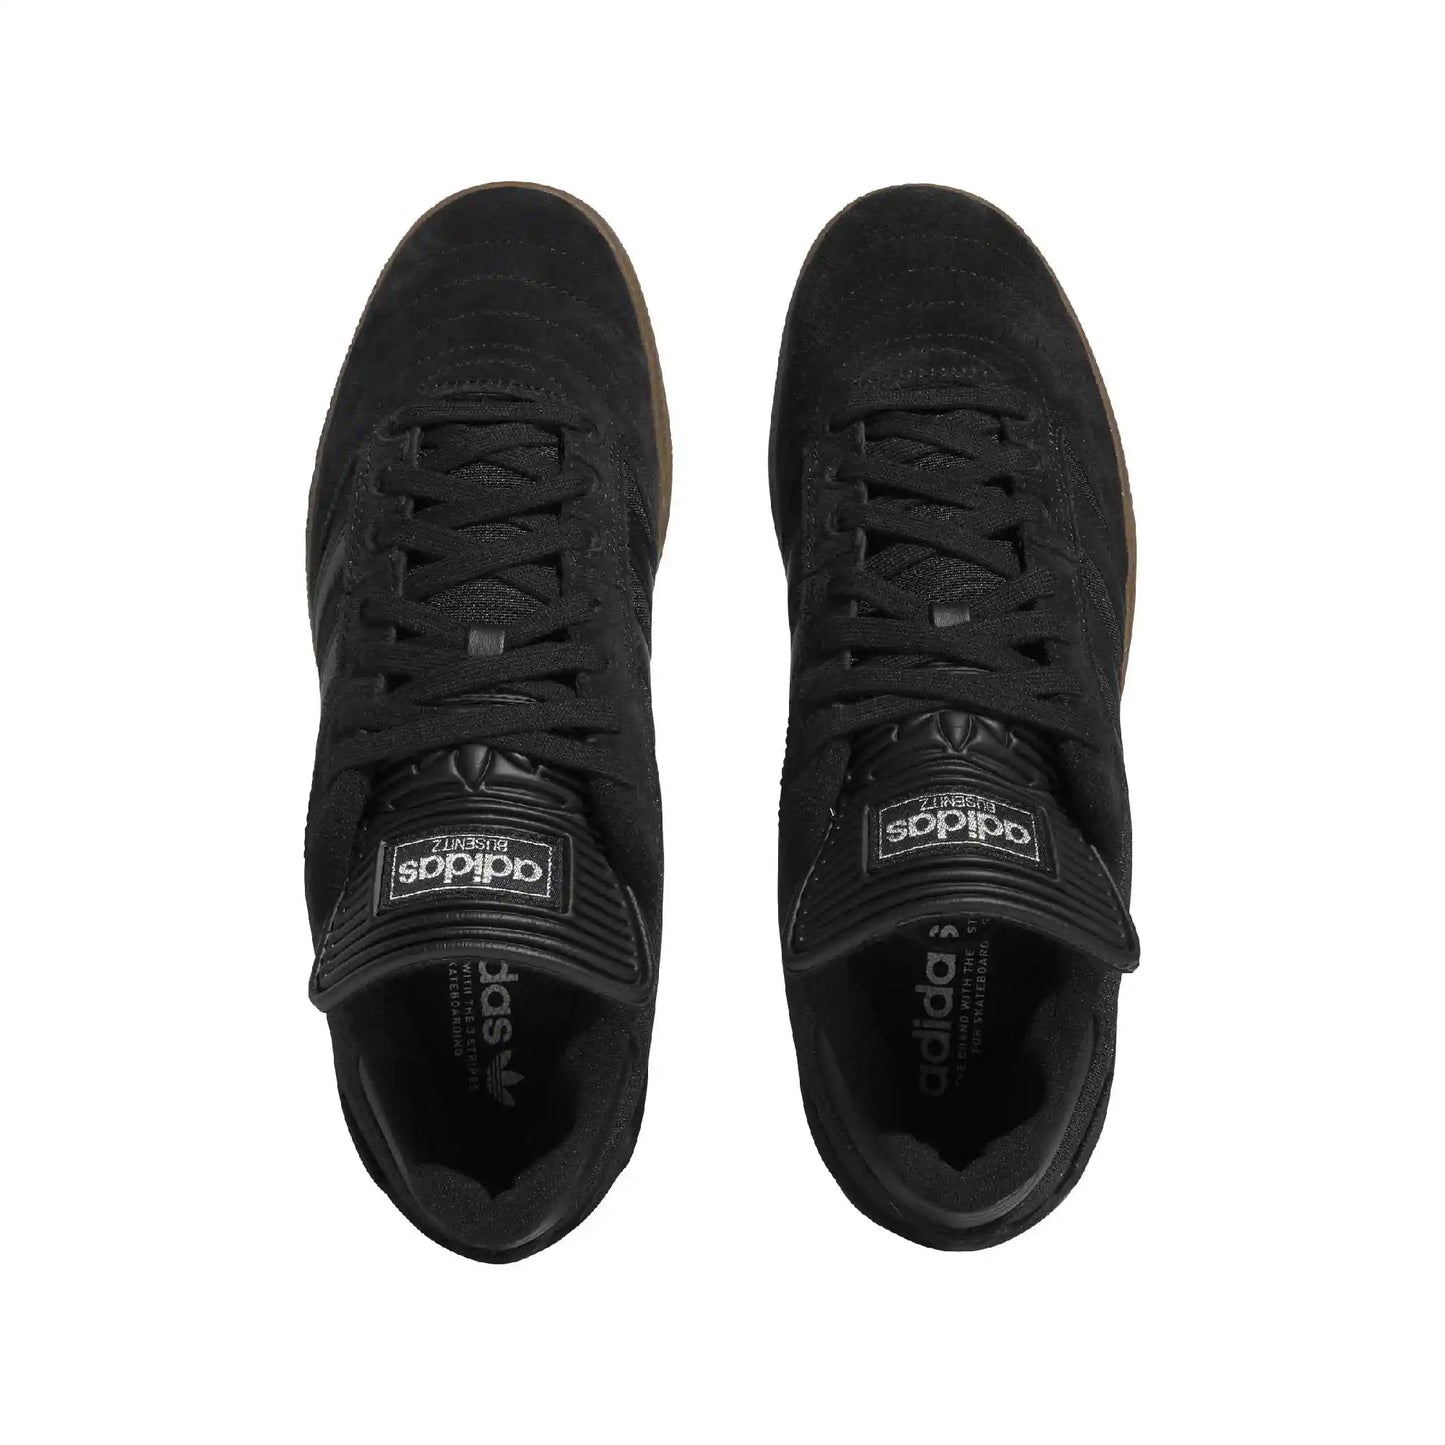 Adidas Busenitz, core black / core black / gum - Tiki Room Skateboards - 3